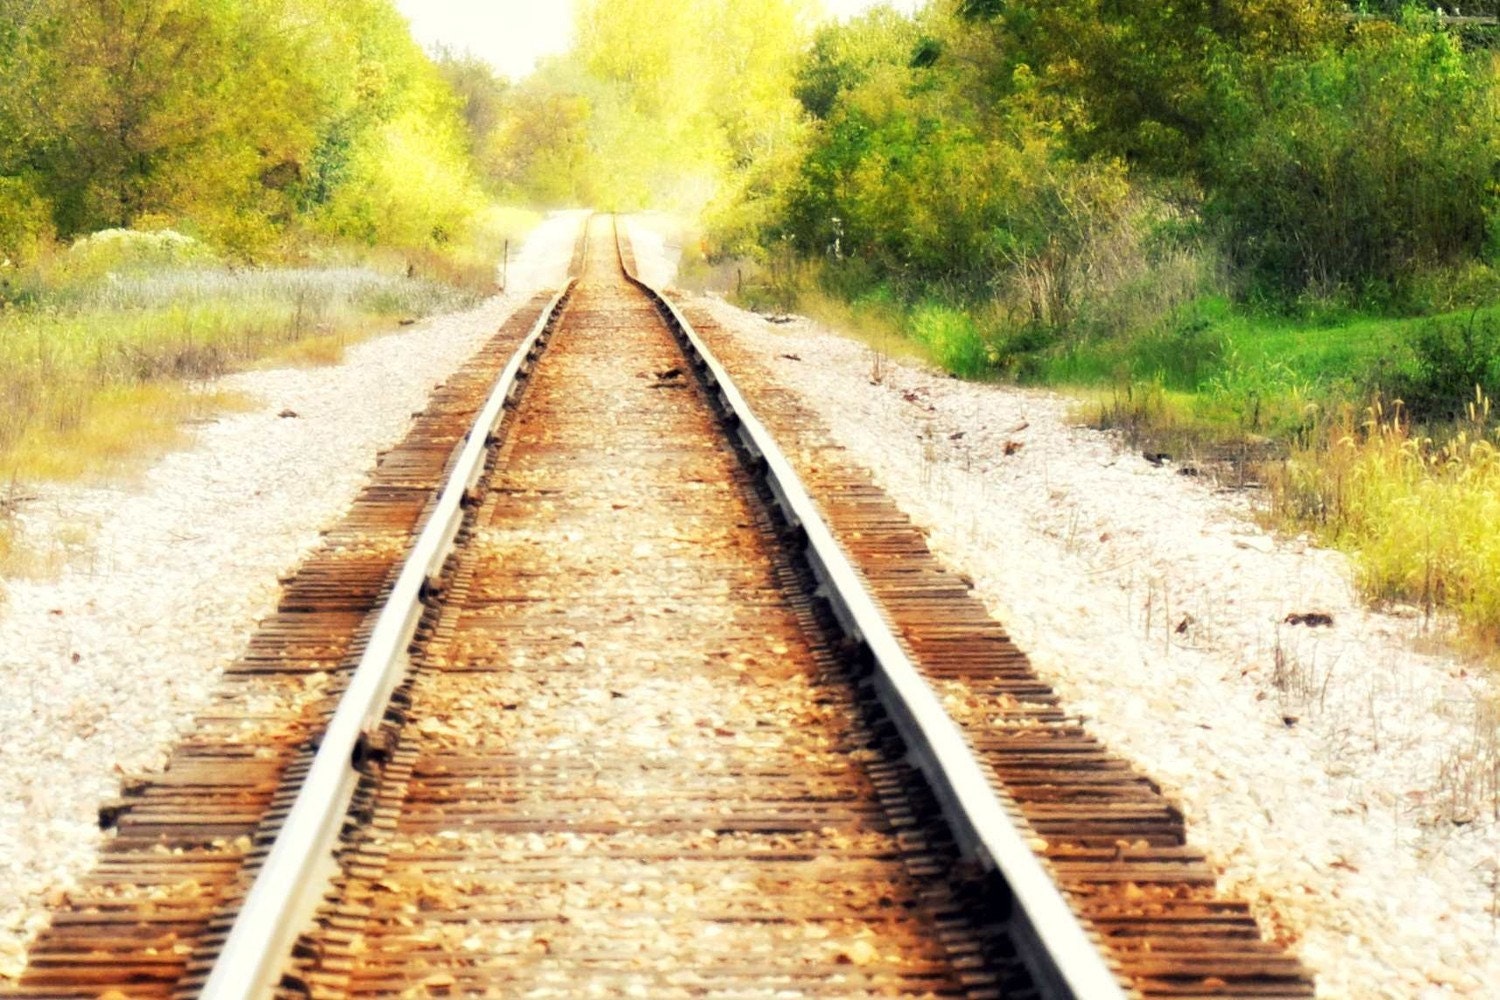 Railroad to Nowhere